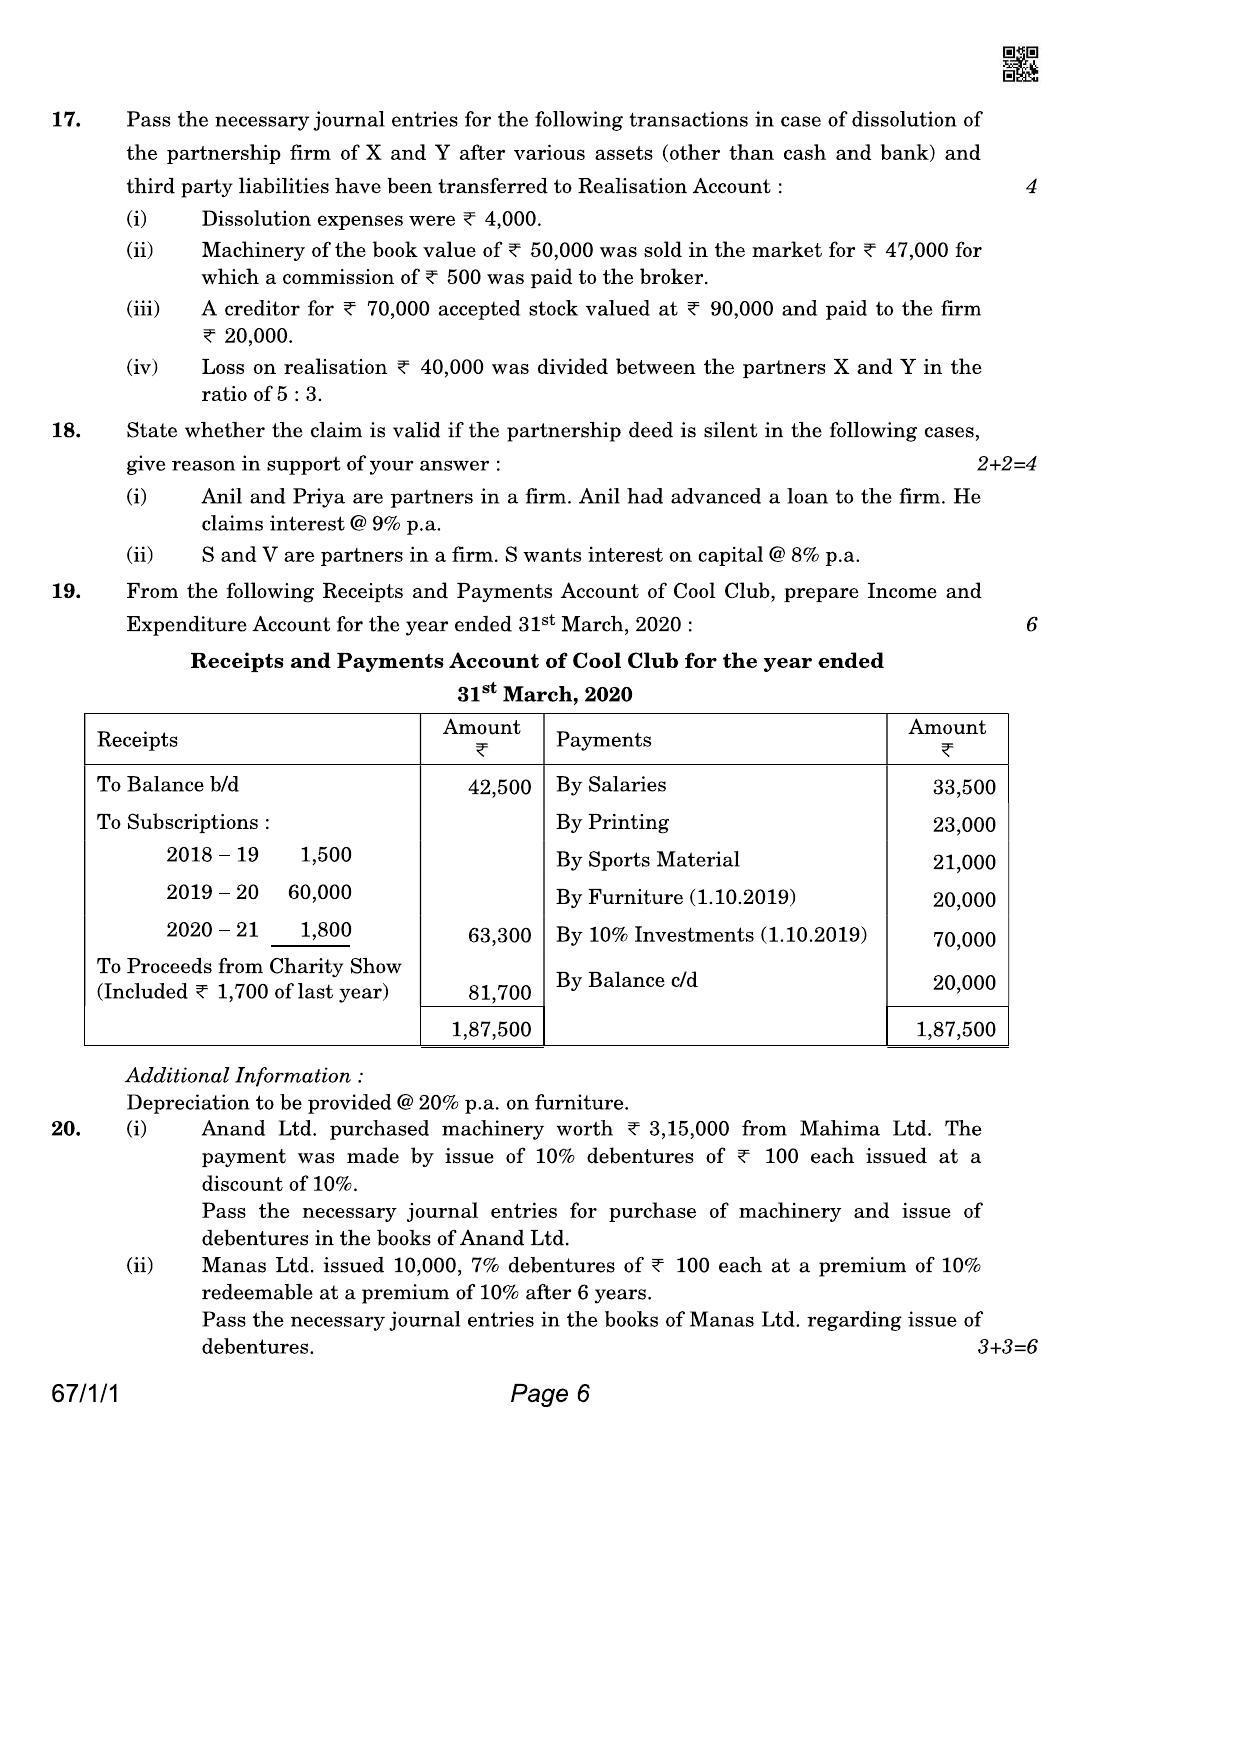 CBSE Class 12 QP_055_Accountancy 2021 Compartment Question Paper - Page 6